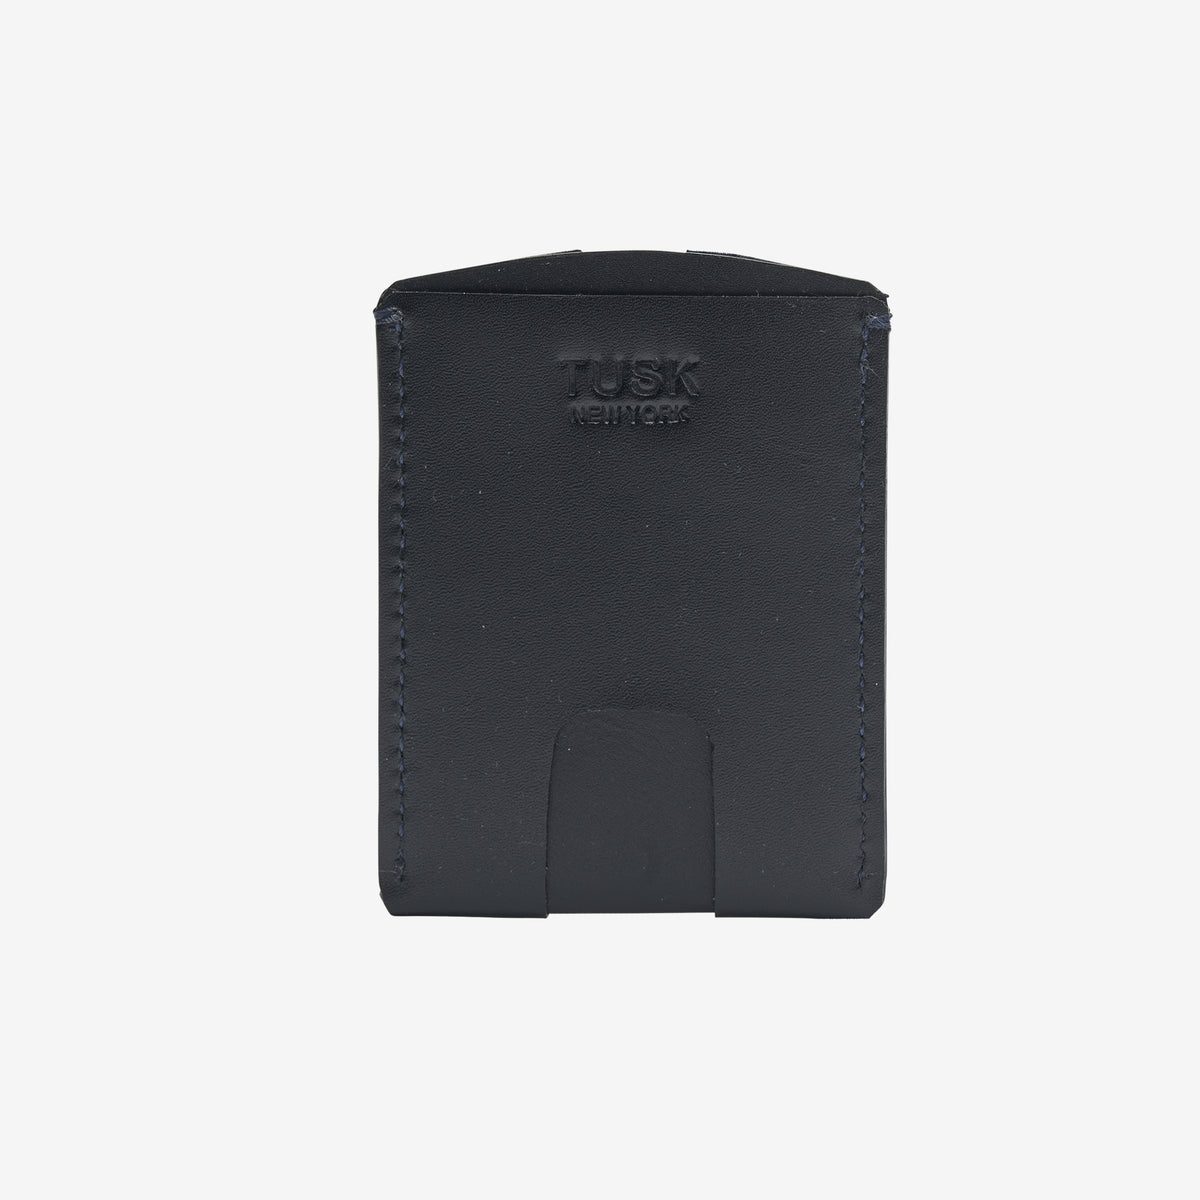 tusk-190-mens-leather-slim-slide-card-case-black-front.jpg